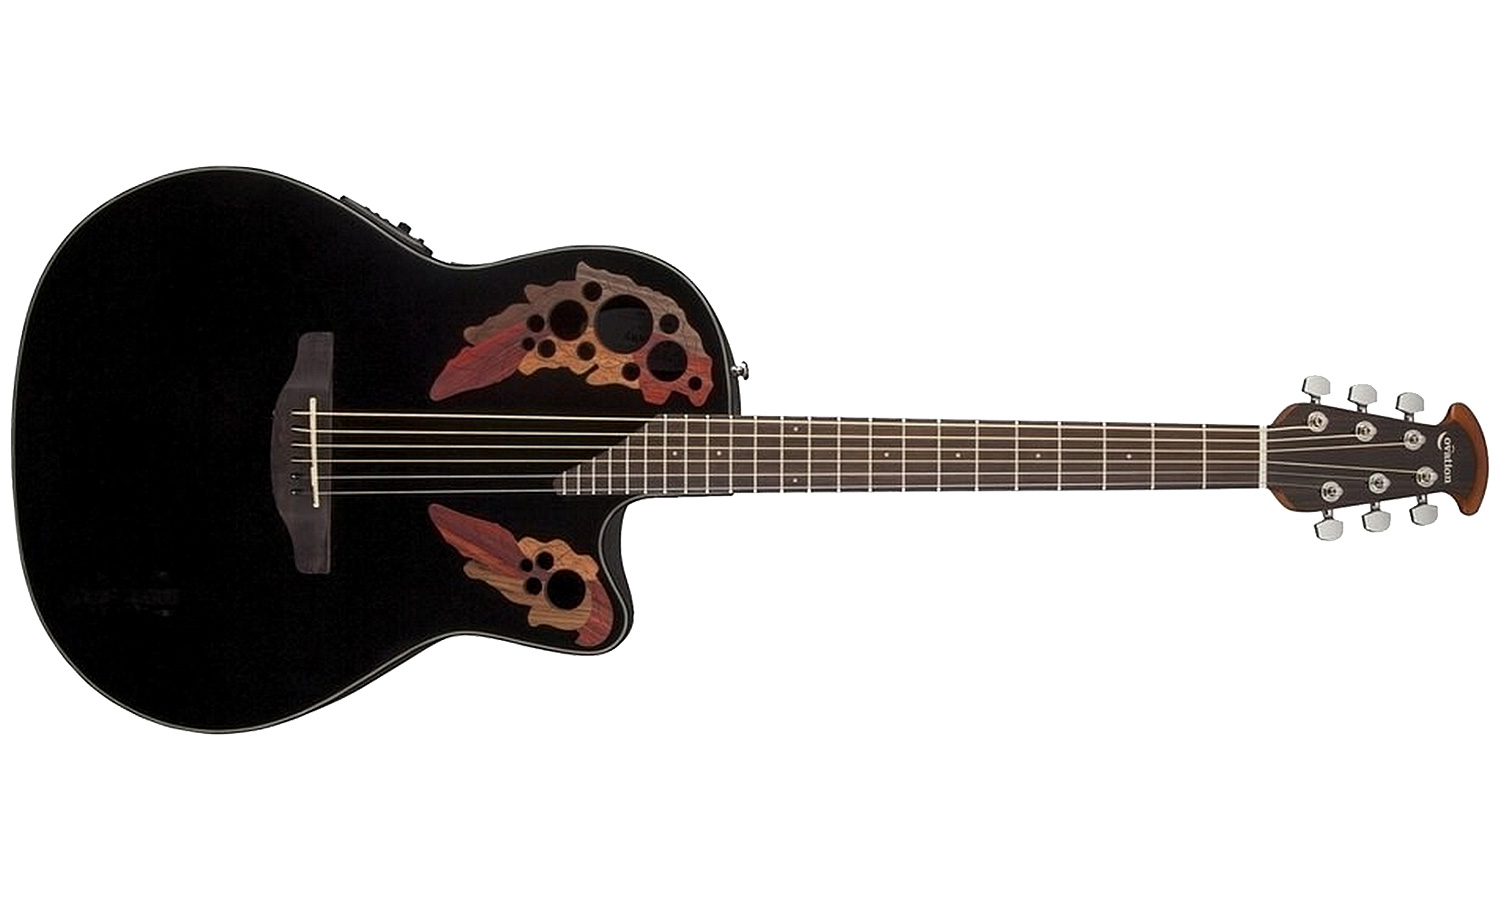 Ovation Ce44-5 Celebrity Elite Mid Cutaway Noir - Black - Elektroakustische Gitarre - Variation 1